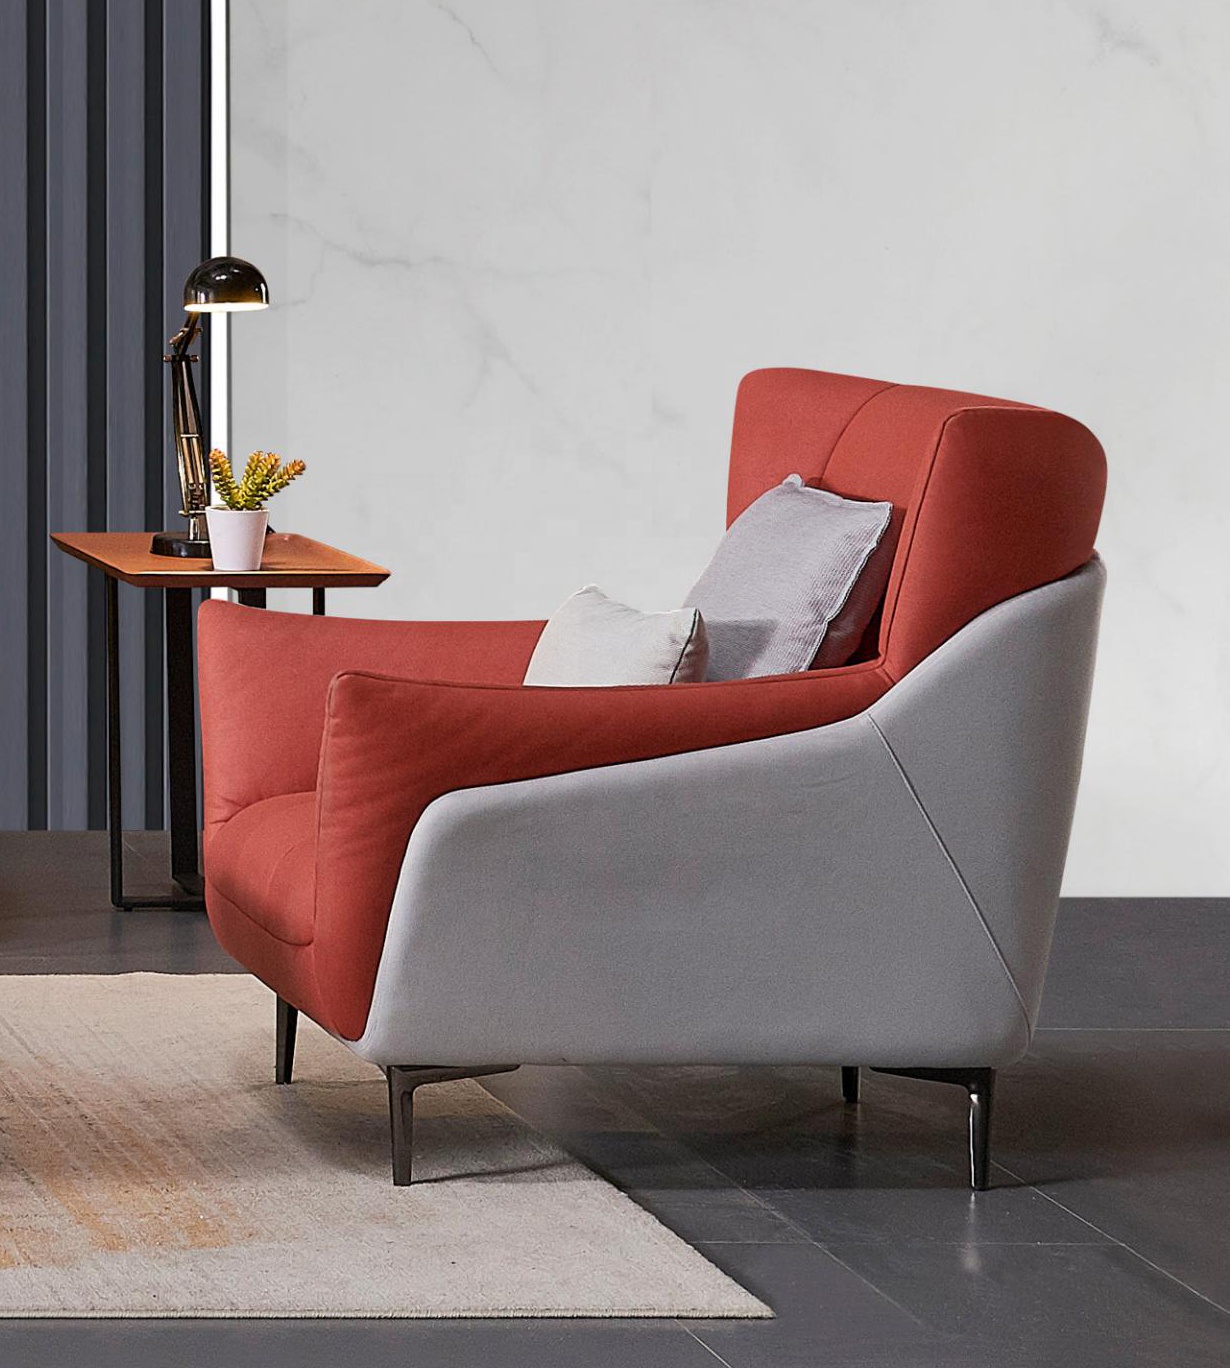 Florence fashionable Style living room furniture leather sofa fabric sofa Hotel apartment furniture